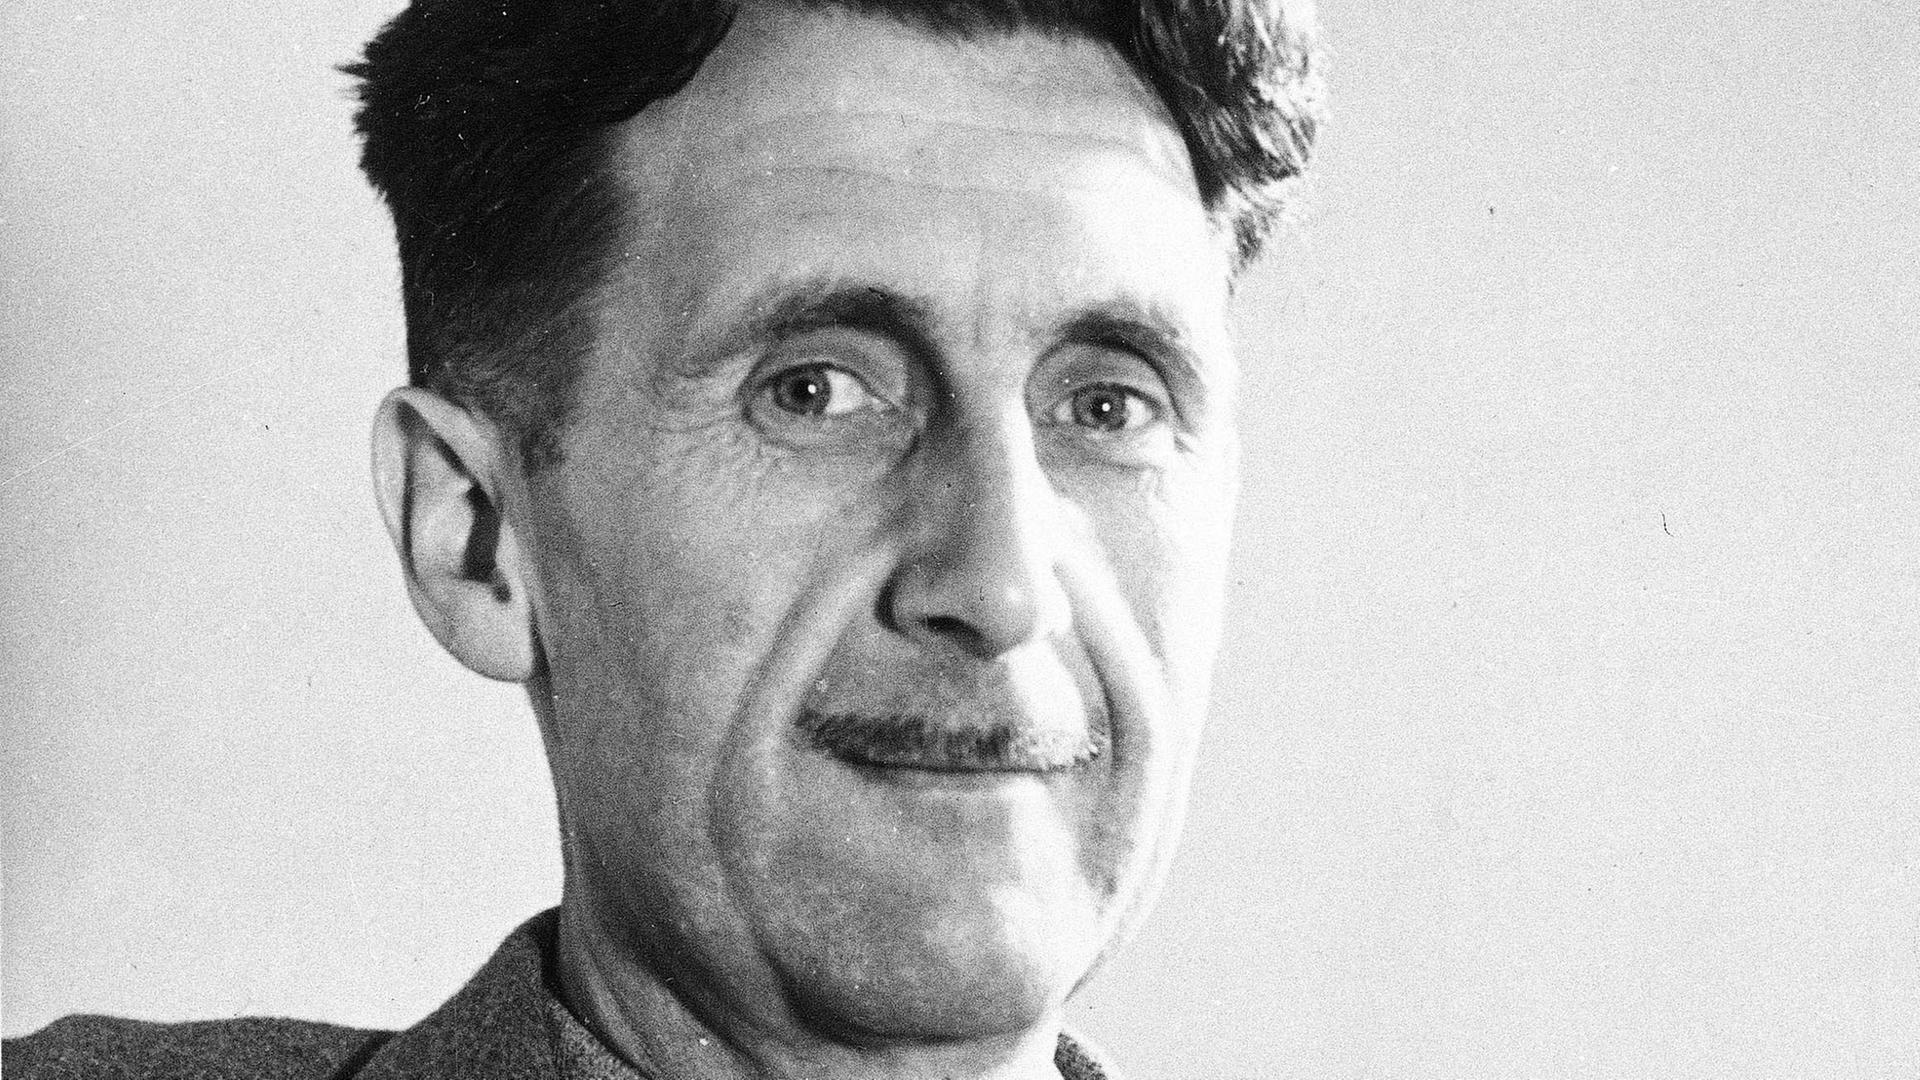 George Orwell im Porträt.